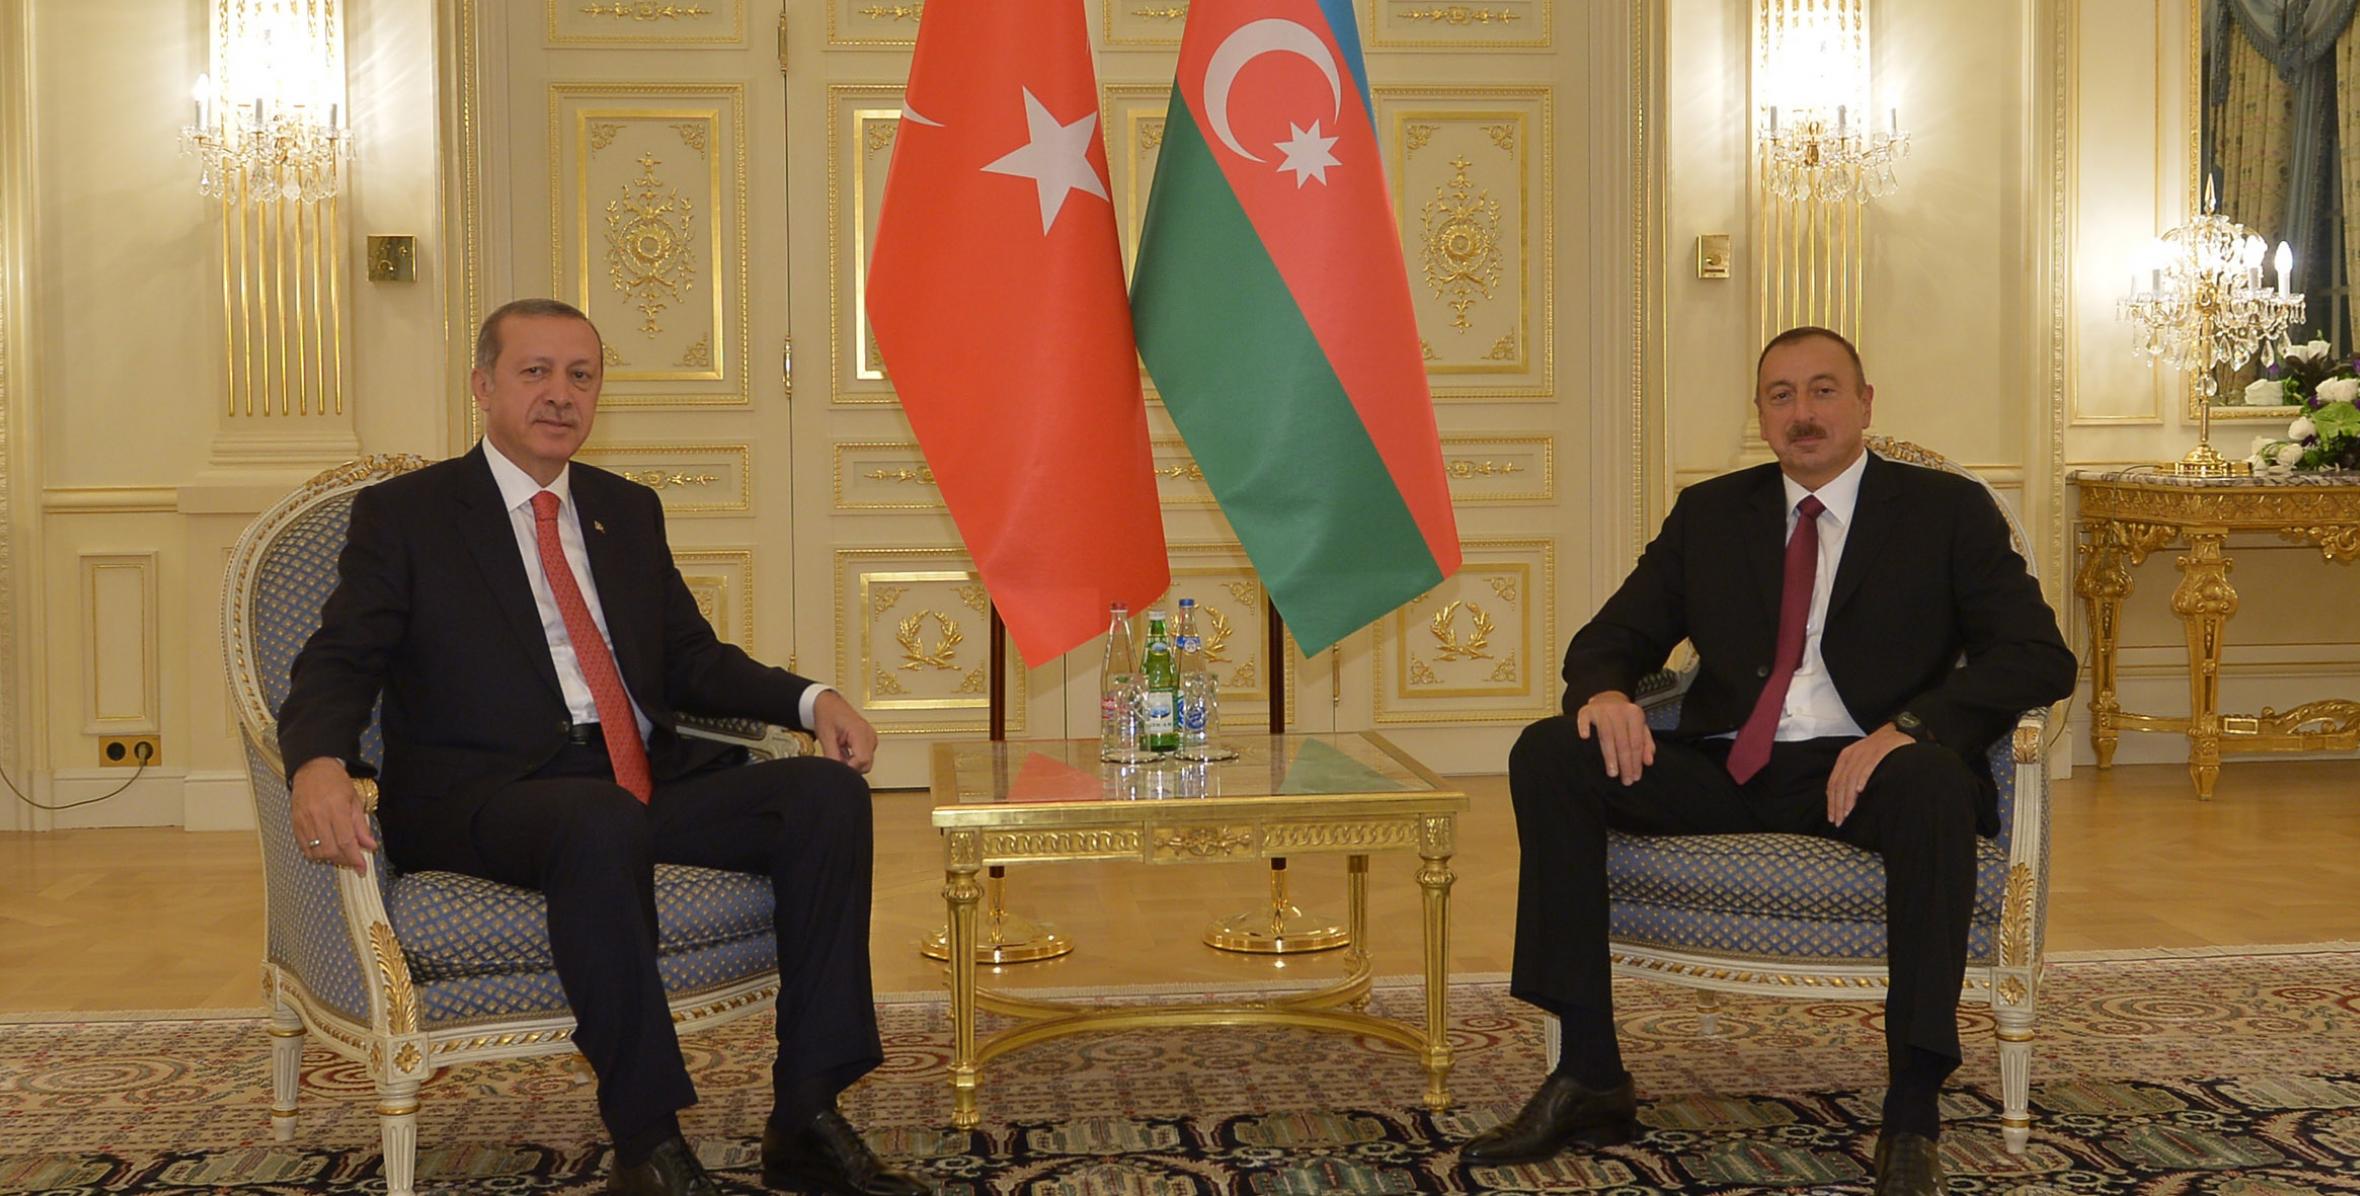 Ilham Aliyev held a one-on-one meeting with President of Turkey Recep Tayyip Erdogan